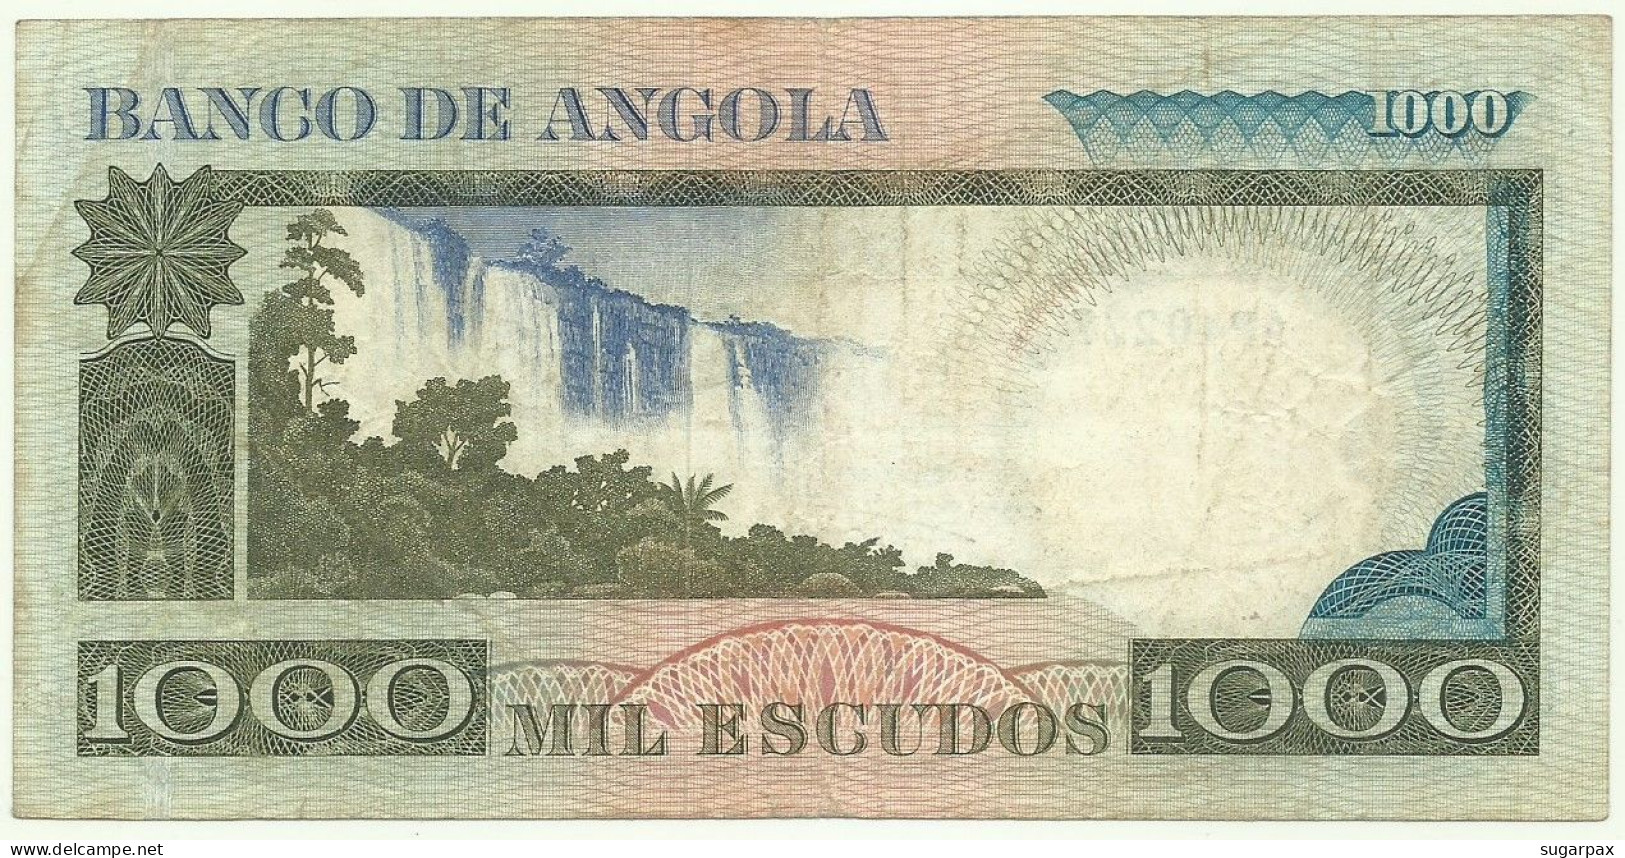 Angola - 1000 Escudos - 10.6.1973 - Pick: 108 - Serie AP - Luiz De Camões - PORTUGAL - 1.000 - Angola